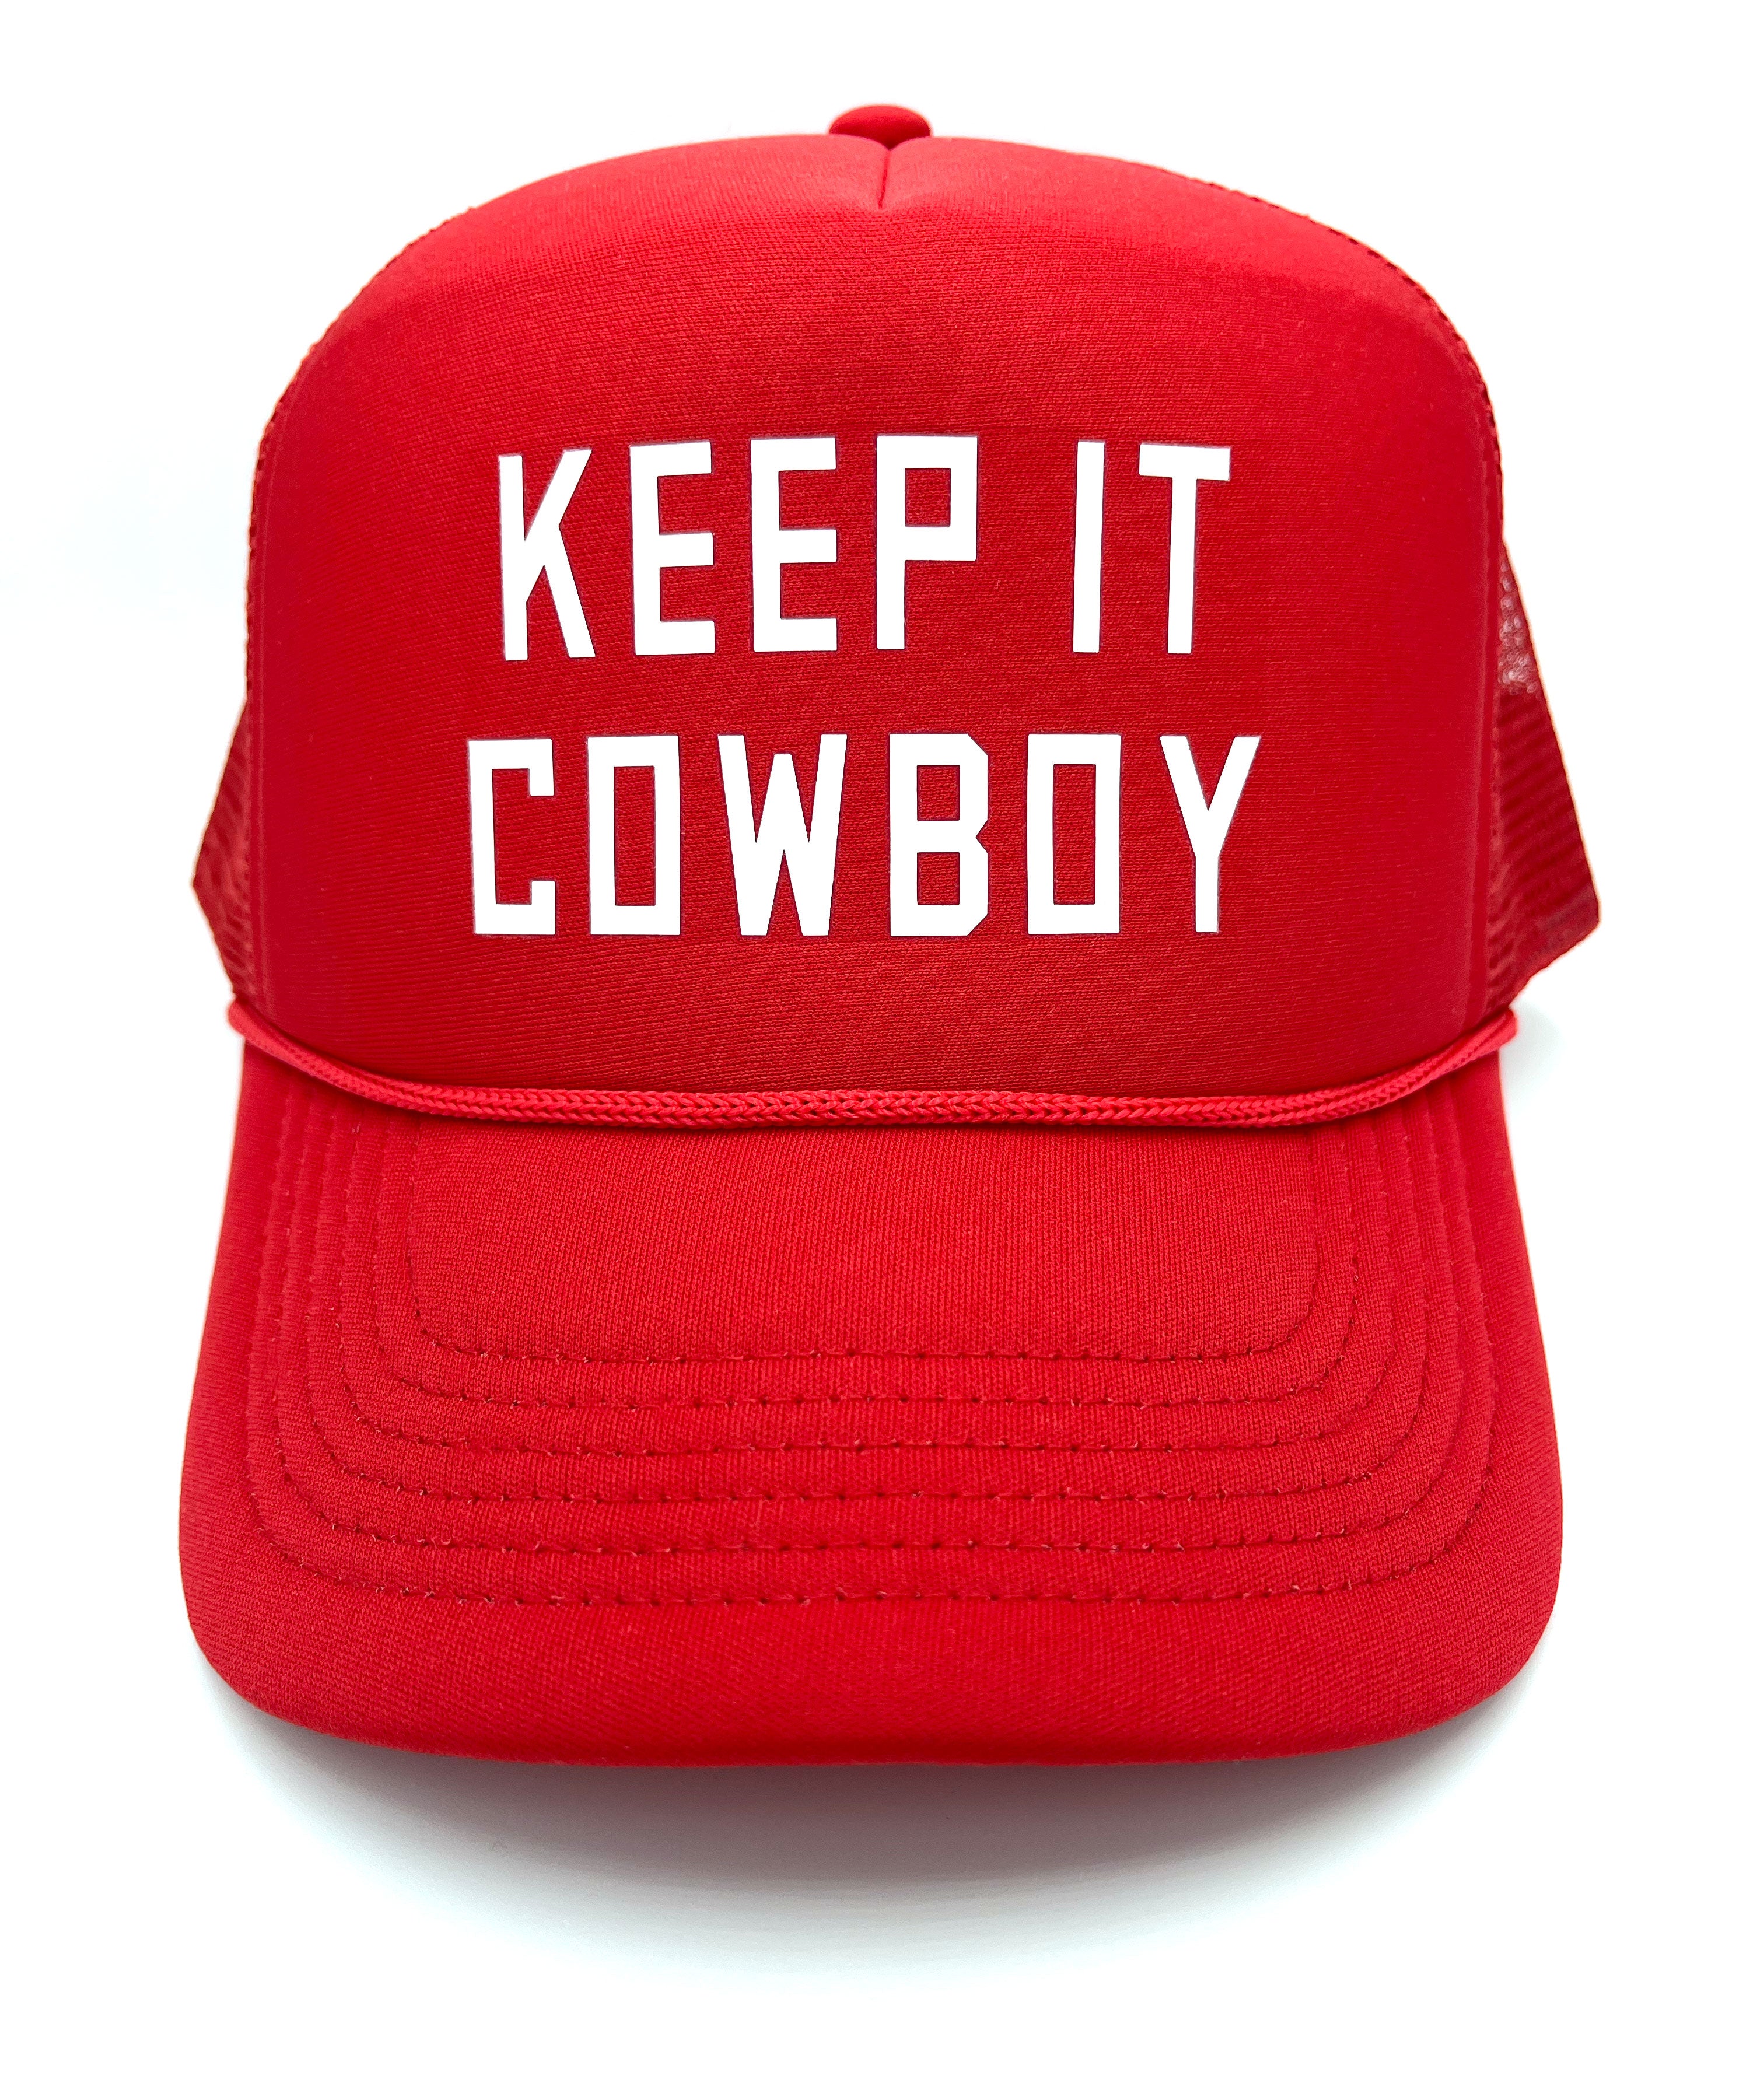 Keep It Cowboy Trucker